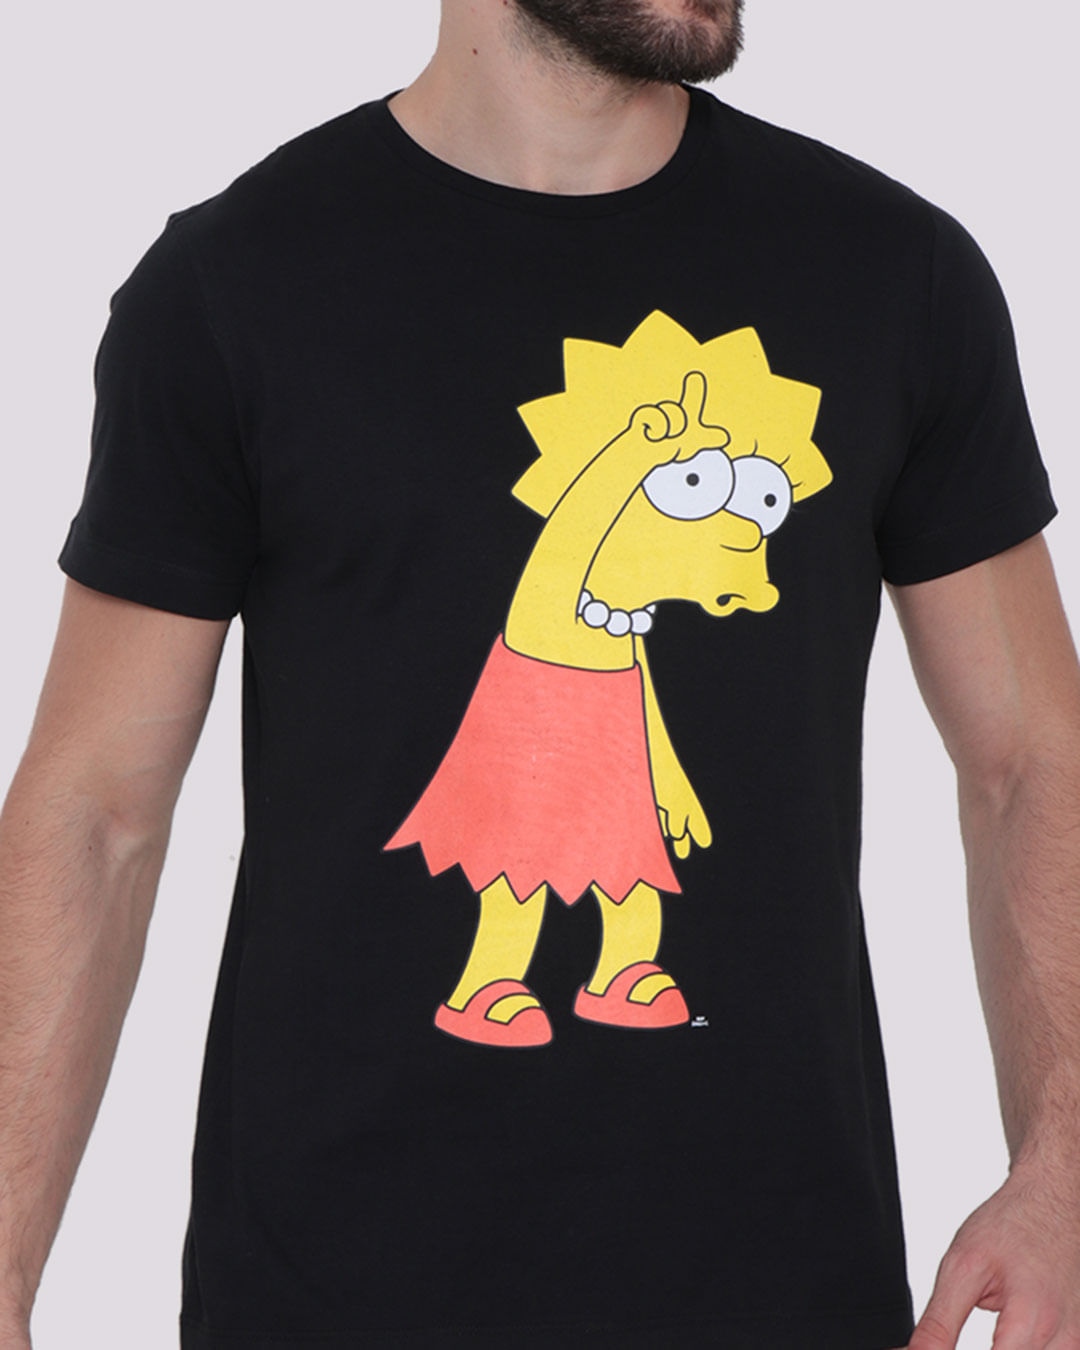 Camiseta-Masculina-Manga-Curta-Simpson-Preta